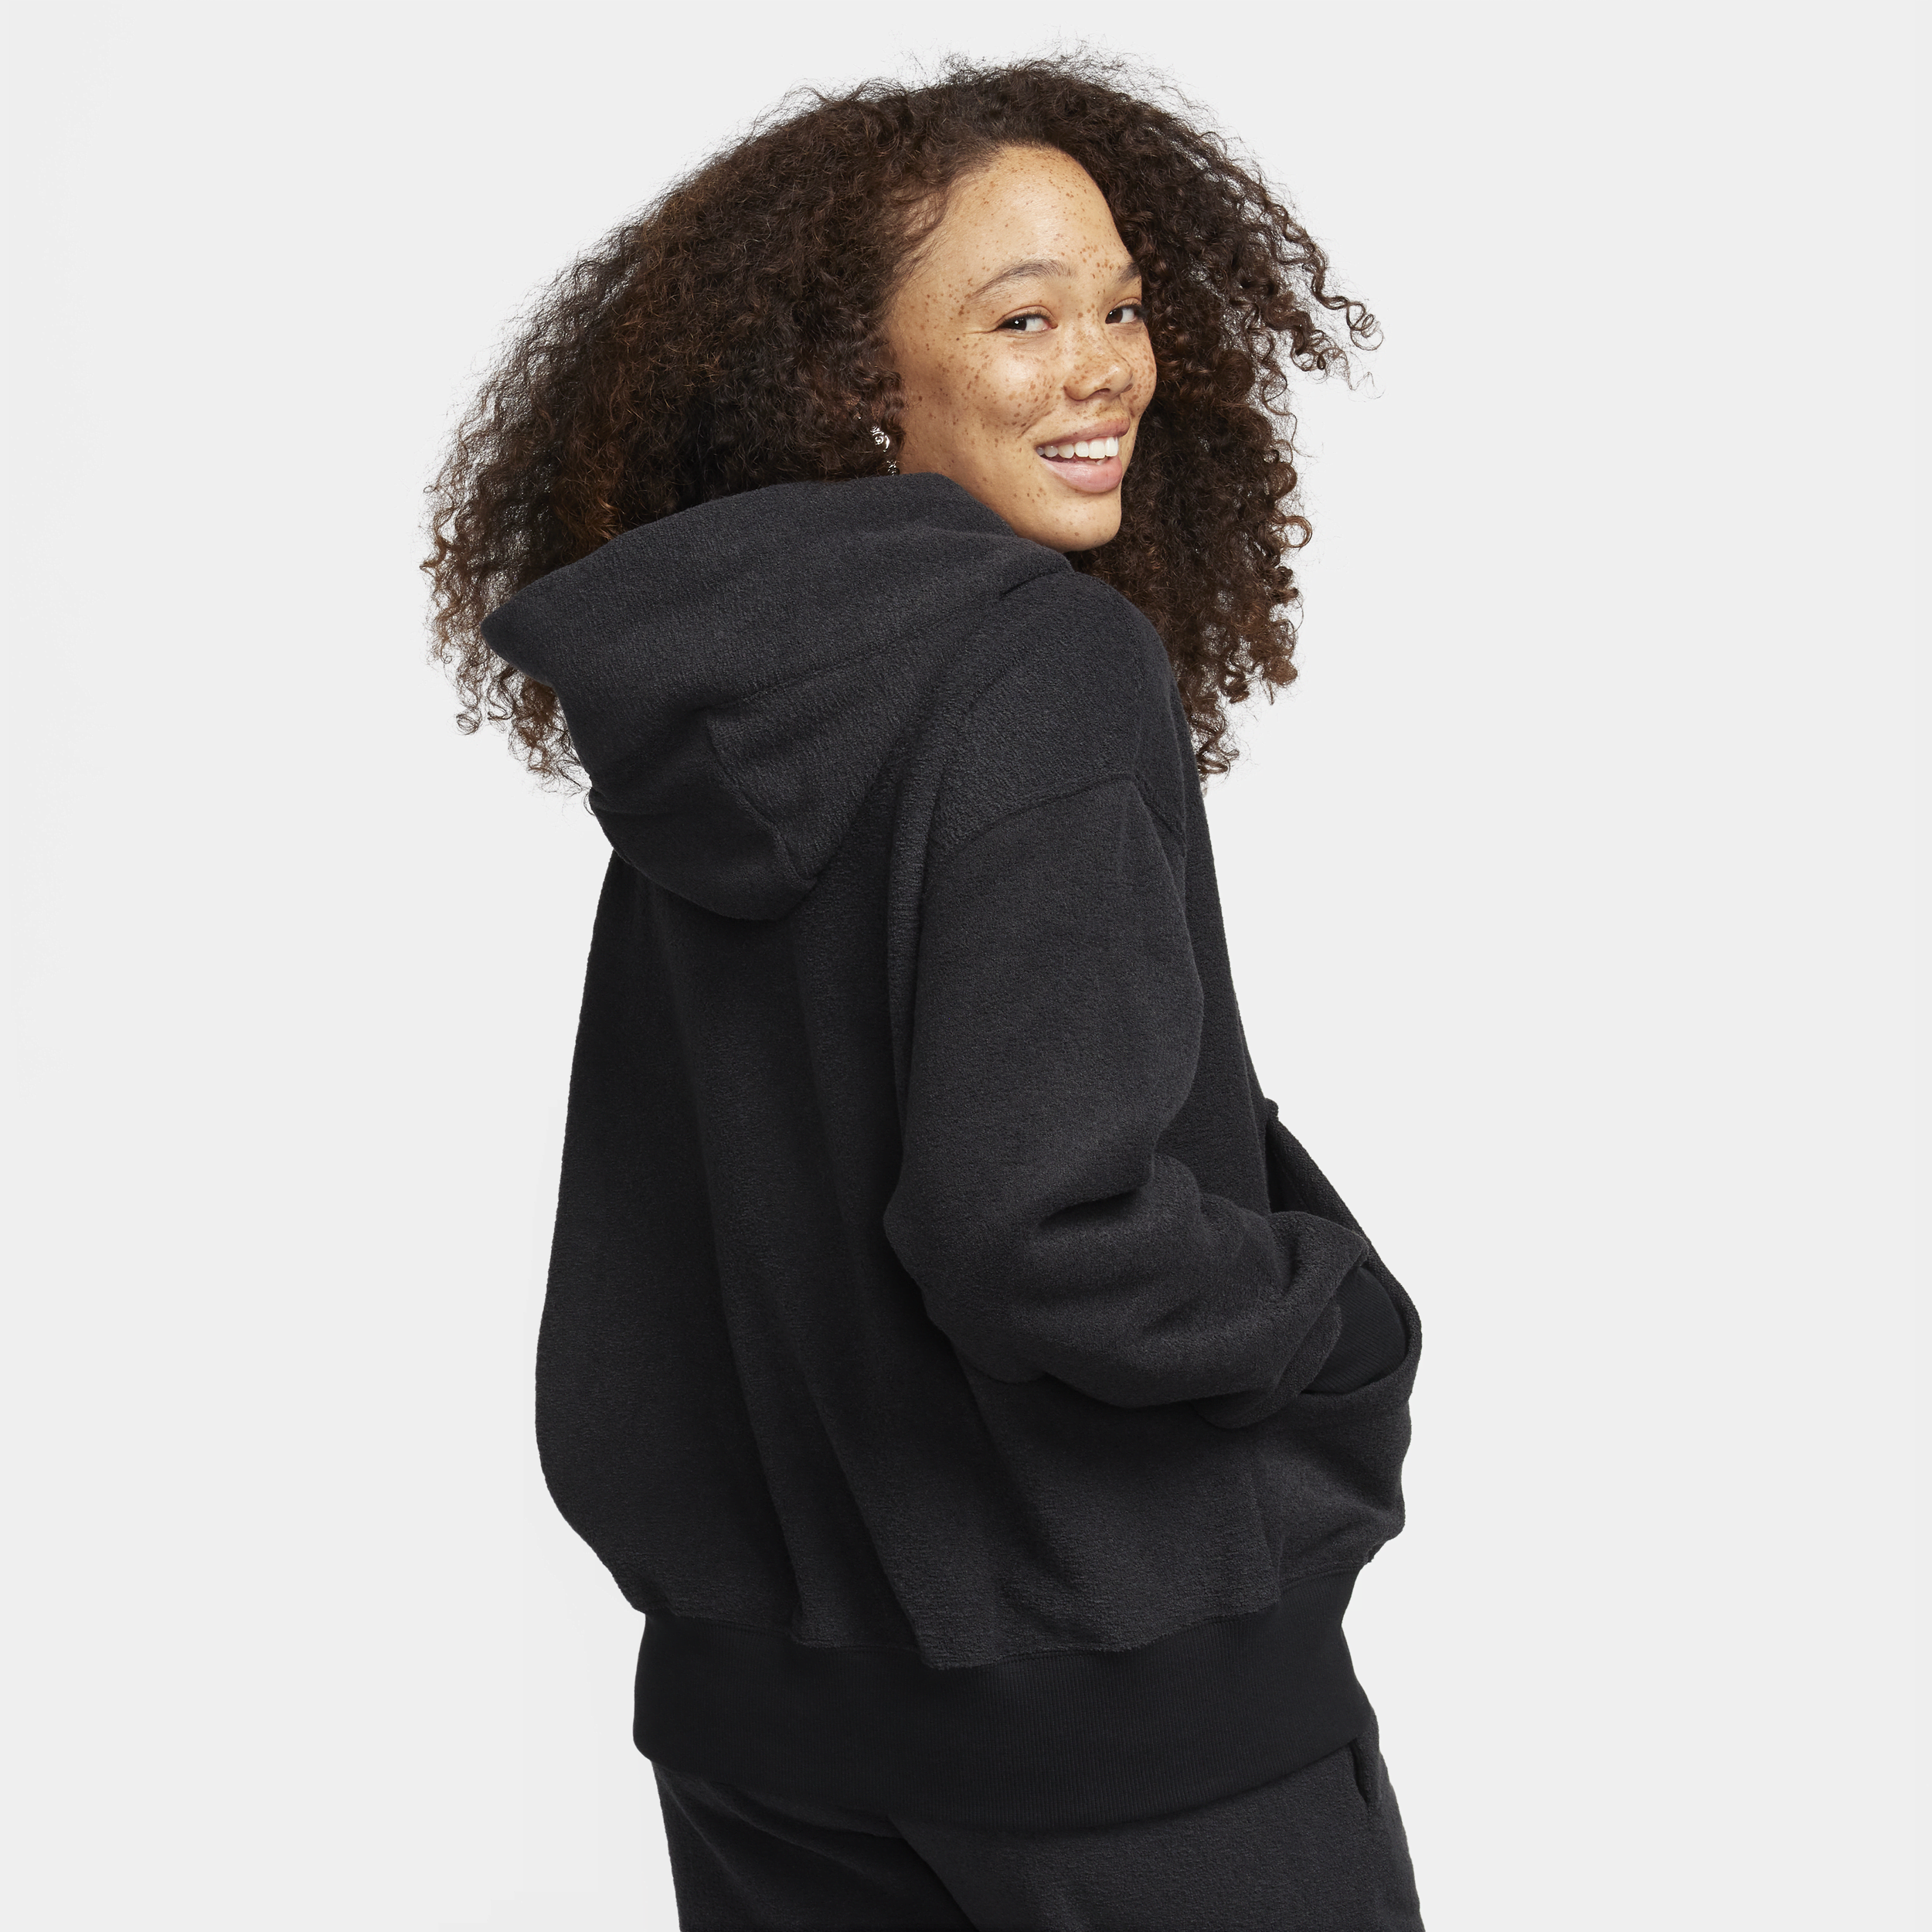 Nike Sportswear Phoenix Plush oversized comfortabele fleecehoodie voor dames Zwart